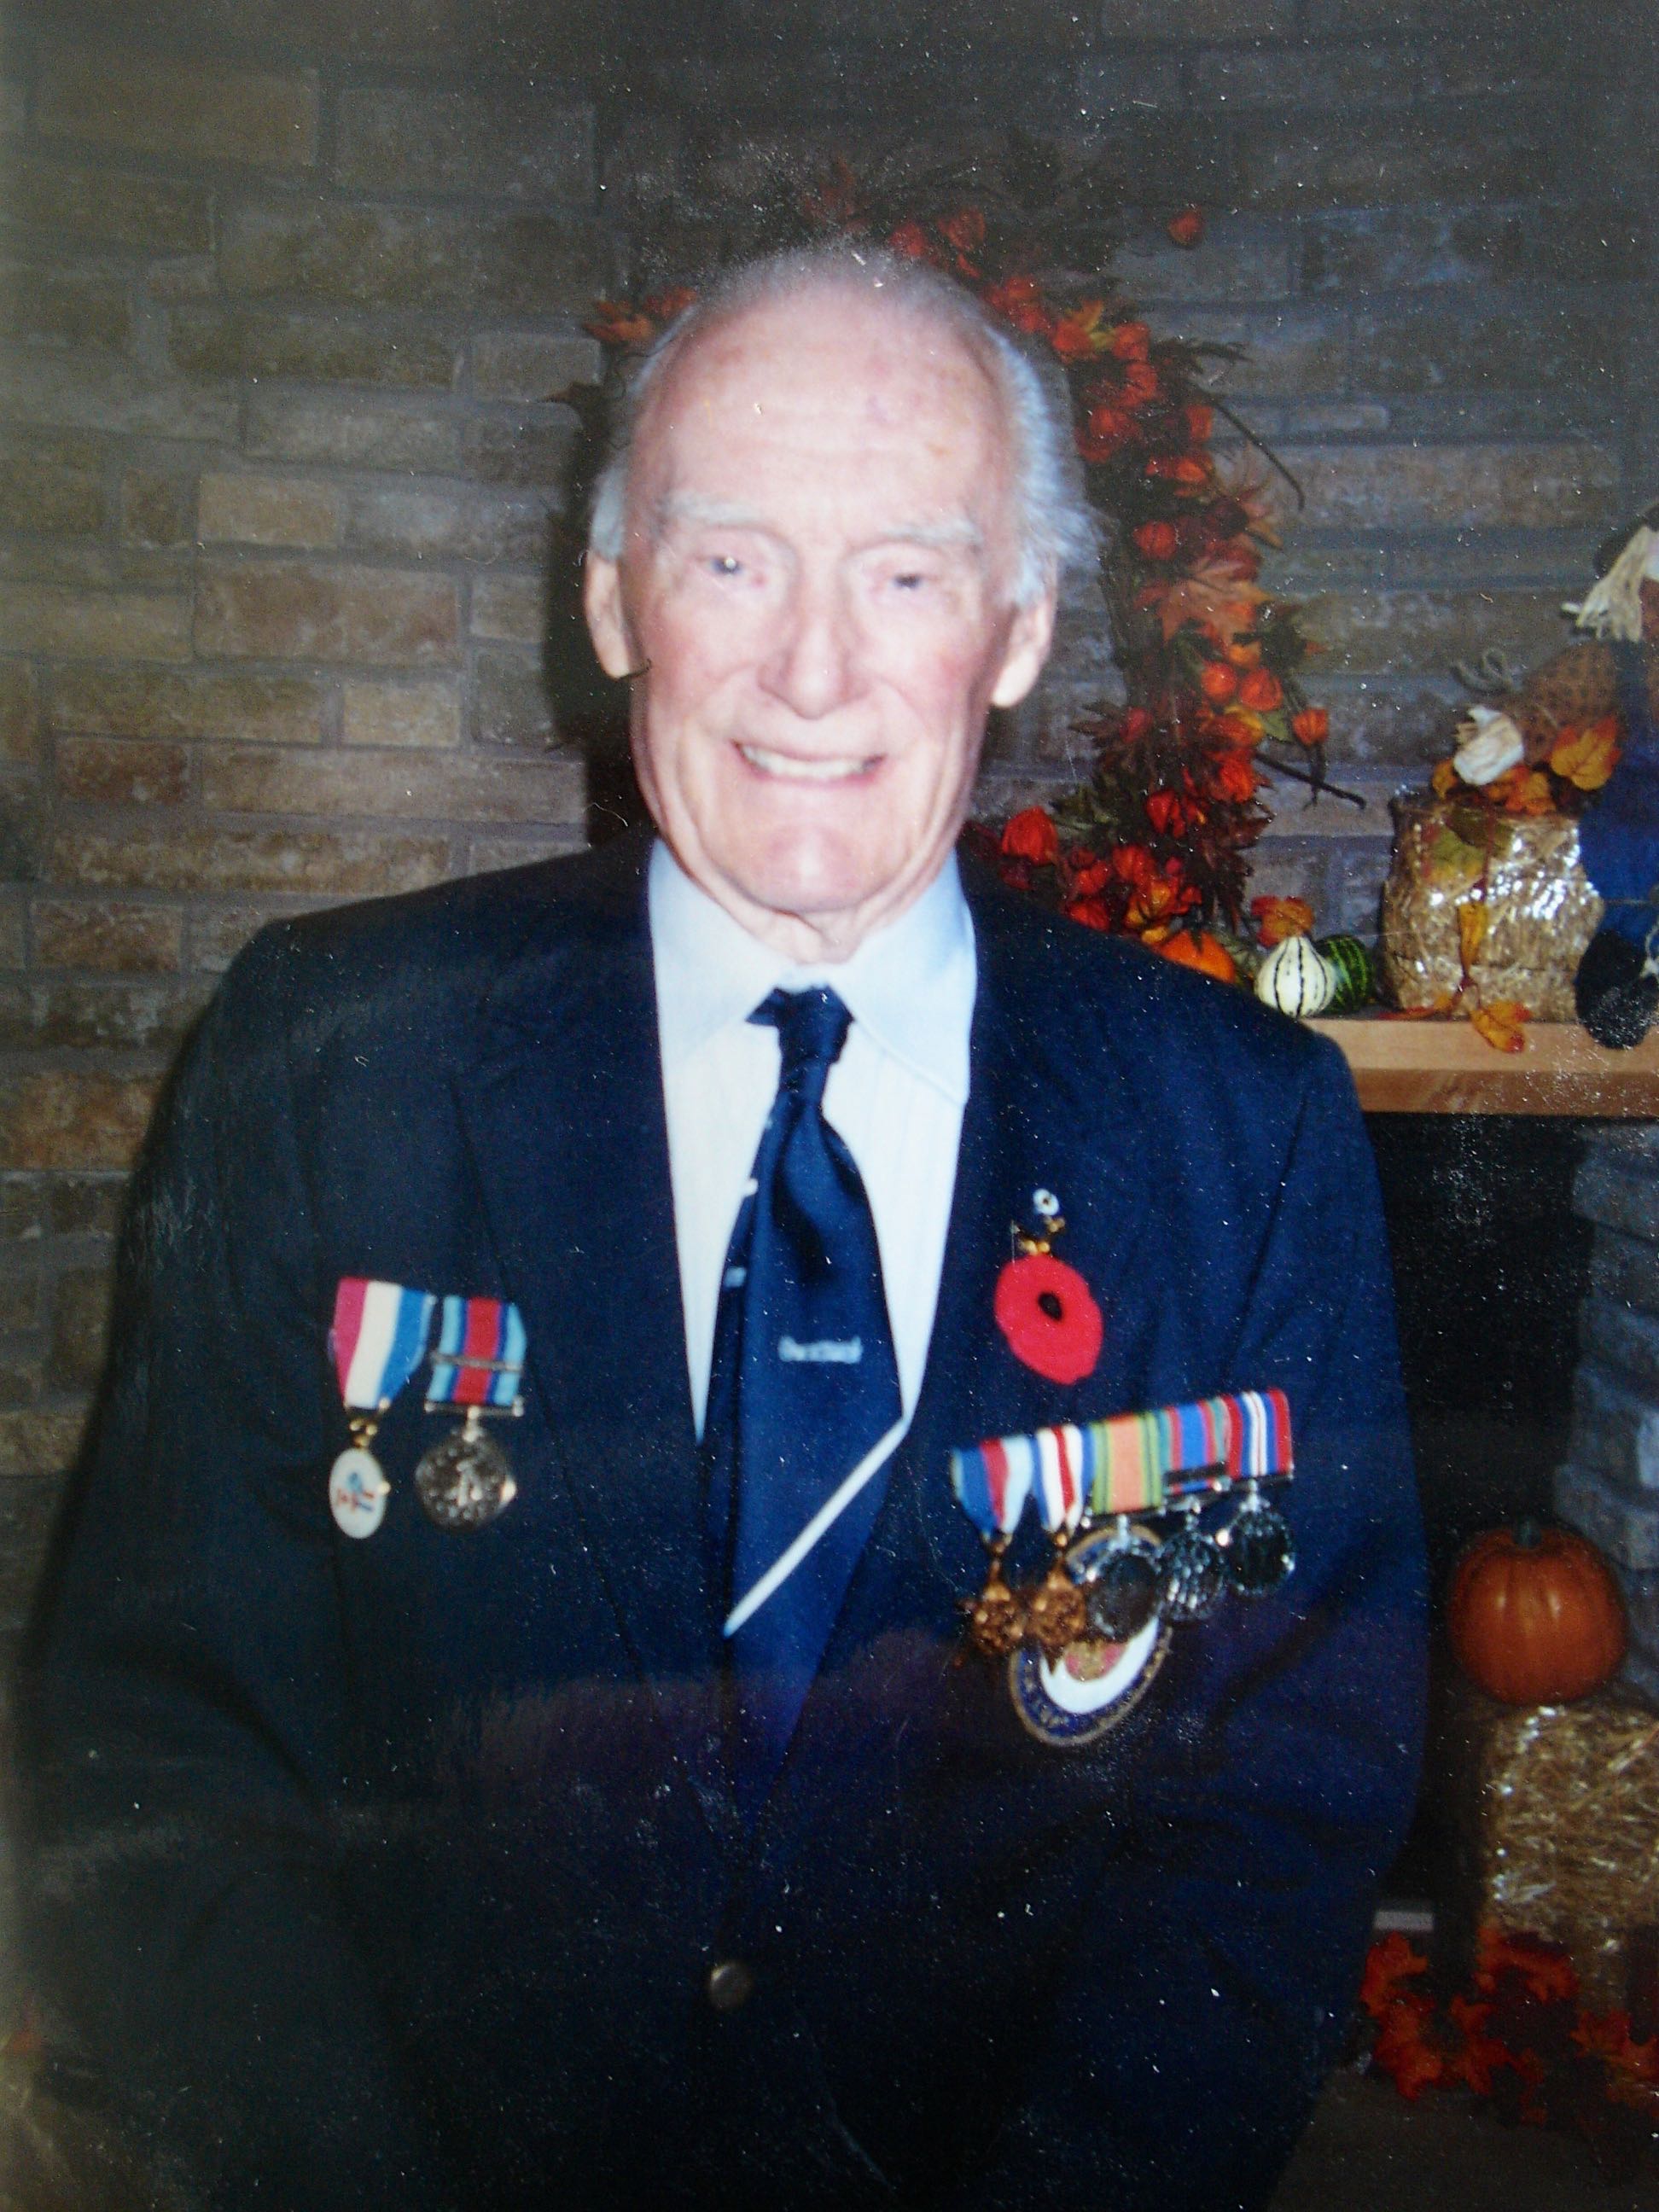 Robert Fox Senior Citizen with Medals